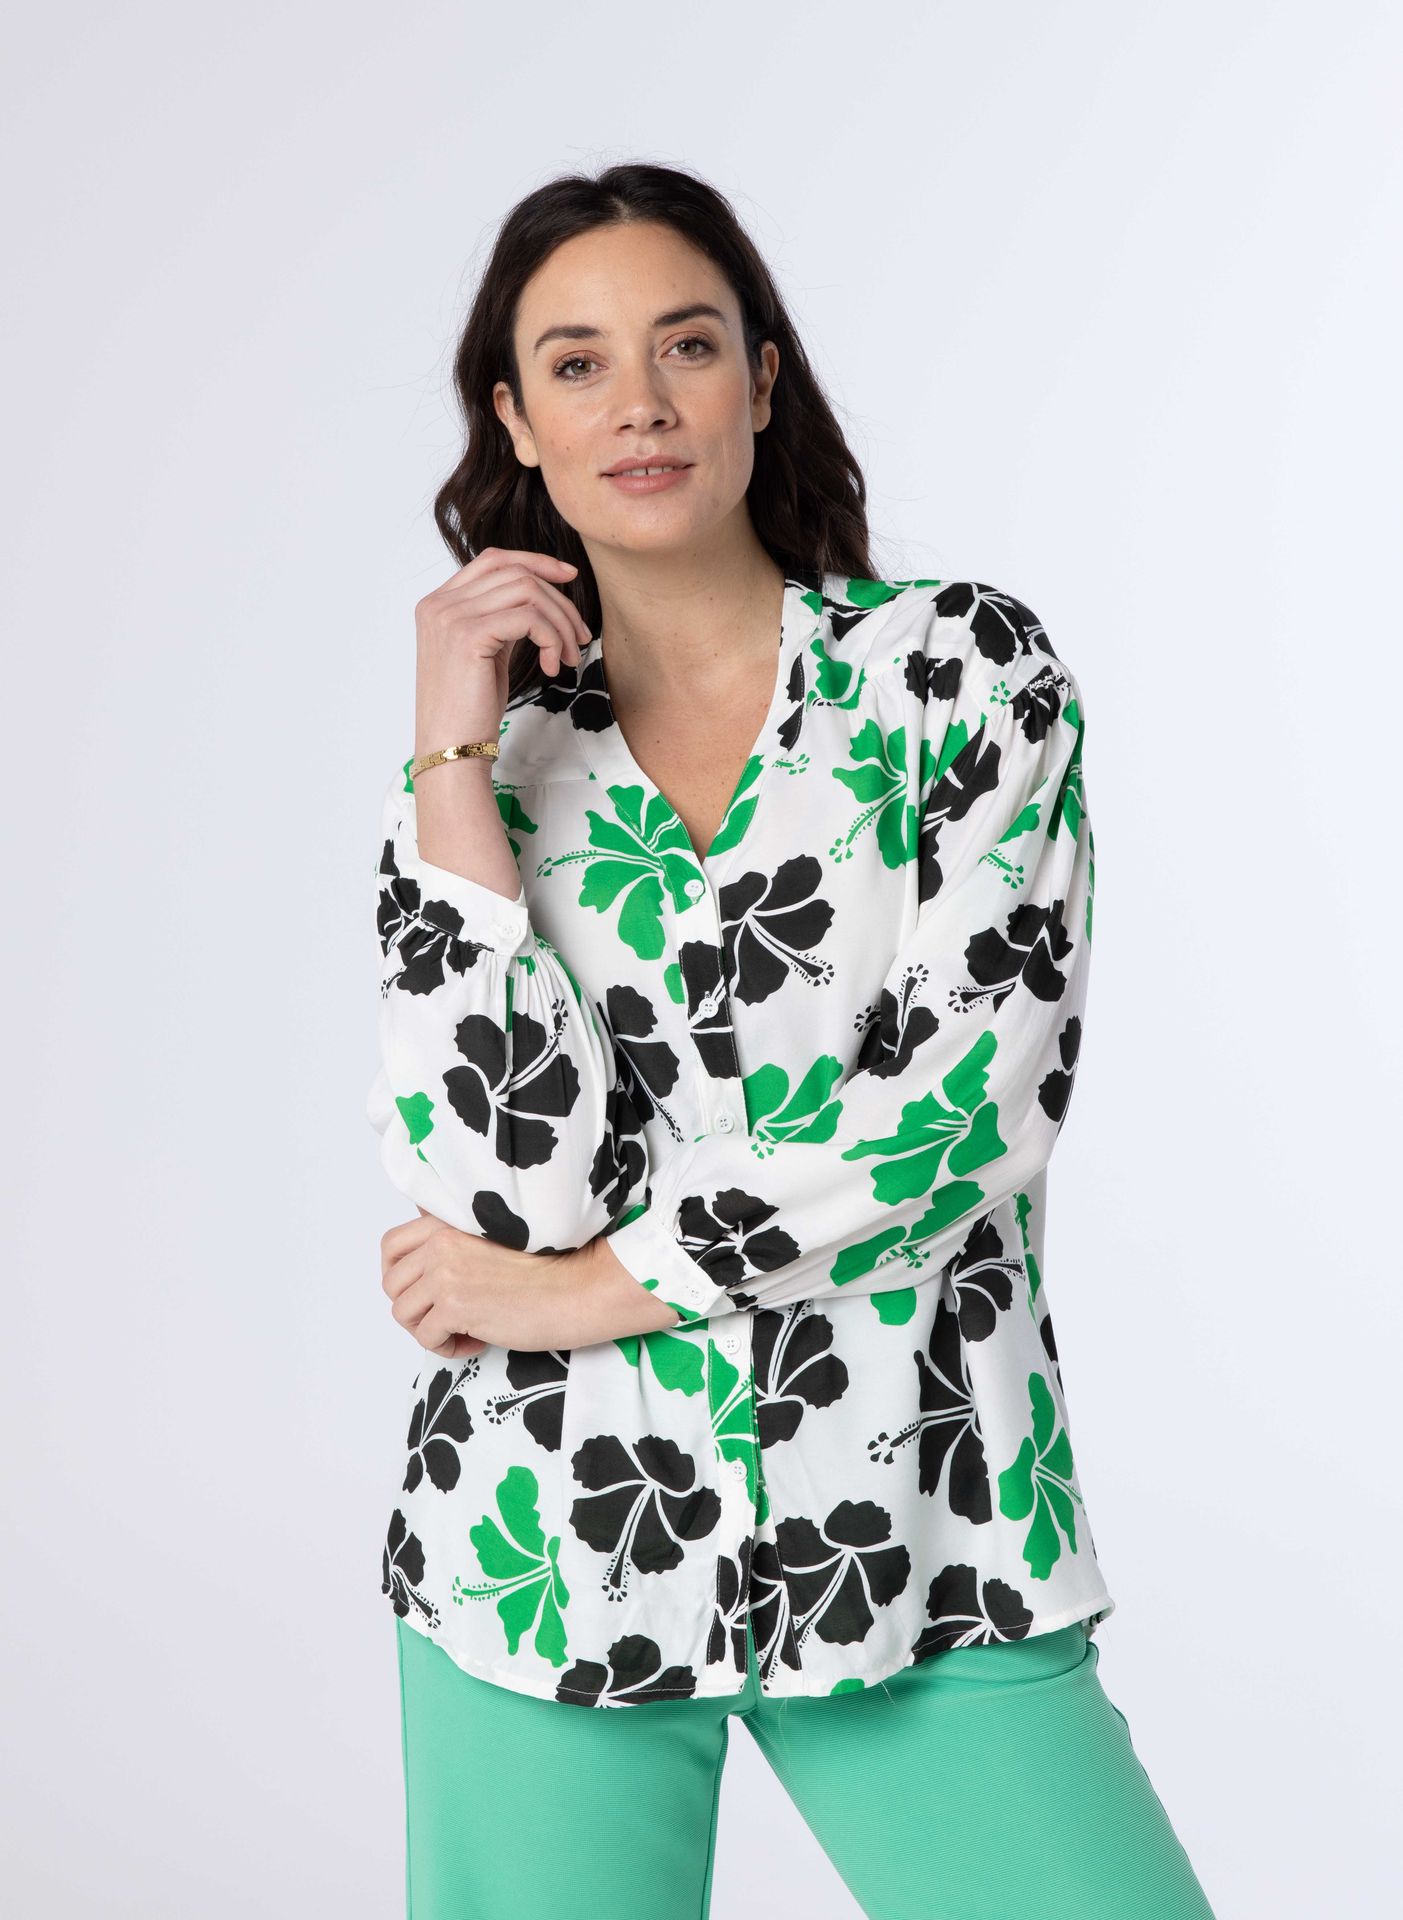 Norah Meerkleurige blouse green multicolor 213509-520